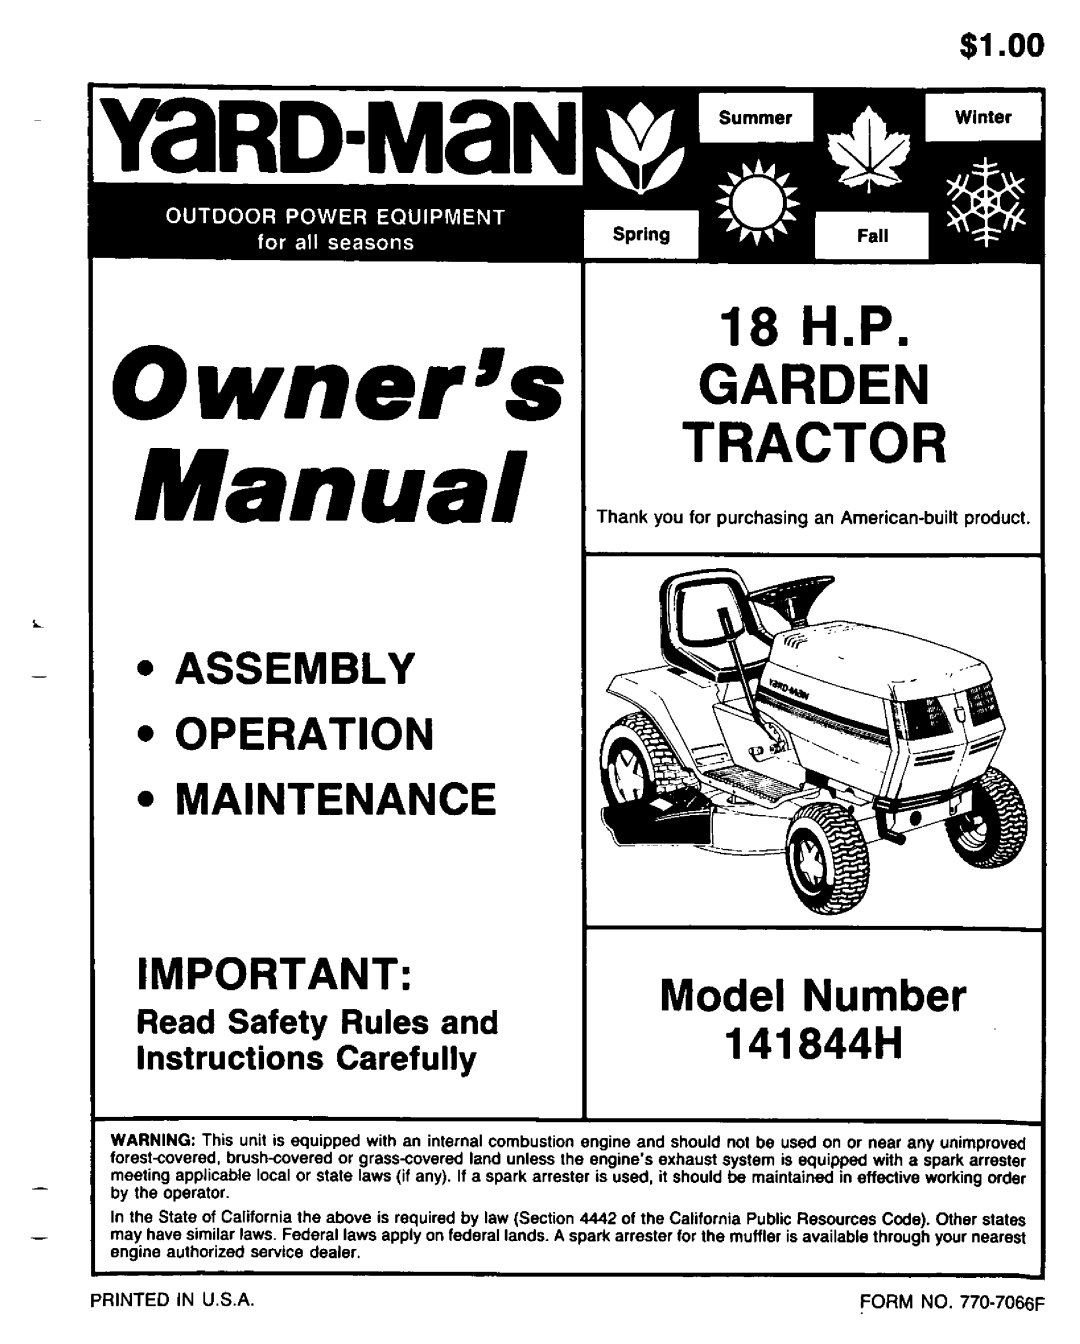 Yard-Man 141844H manual 